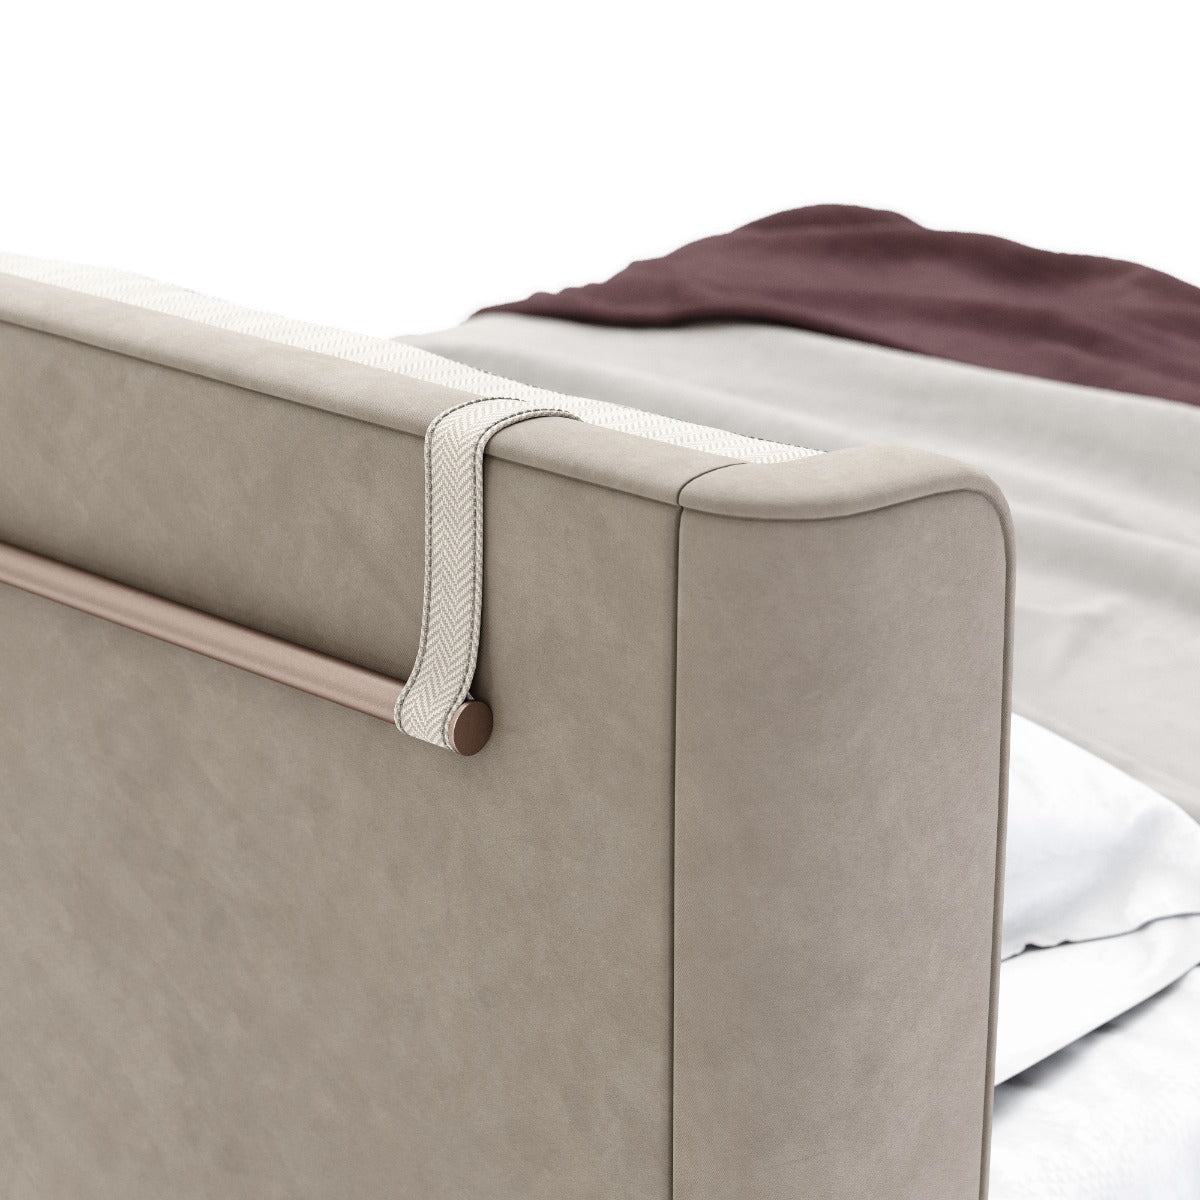 Domkapa Kelsi King Size Bed - Customisable | Modern Furniture + Decor